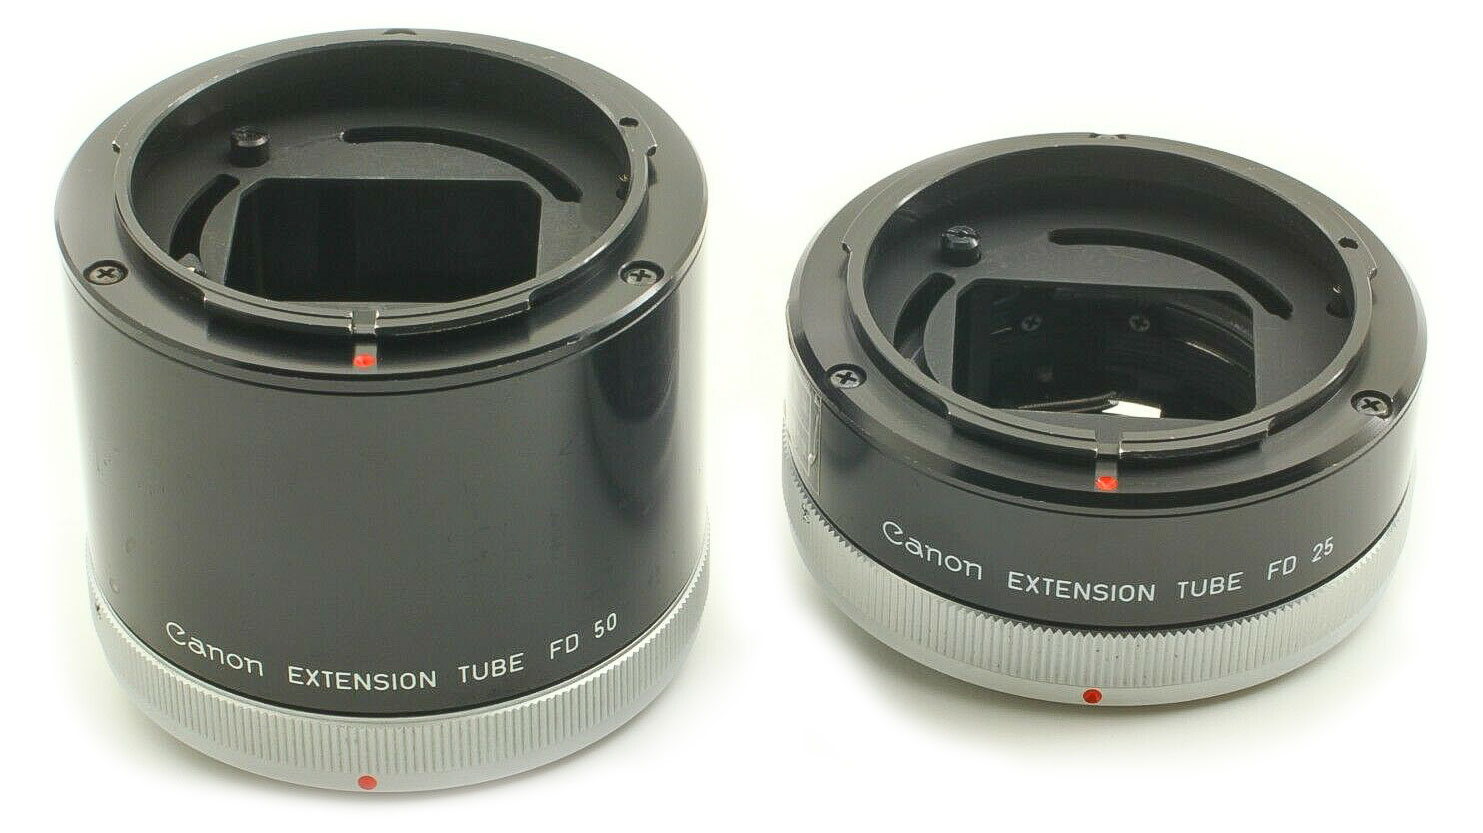 Canon Extension Tubes FD